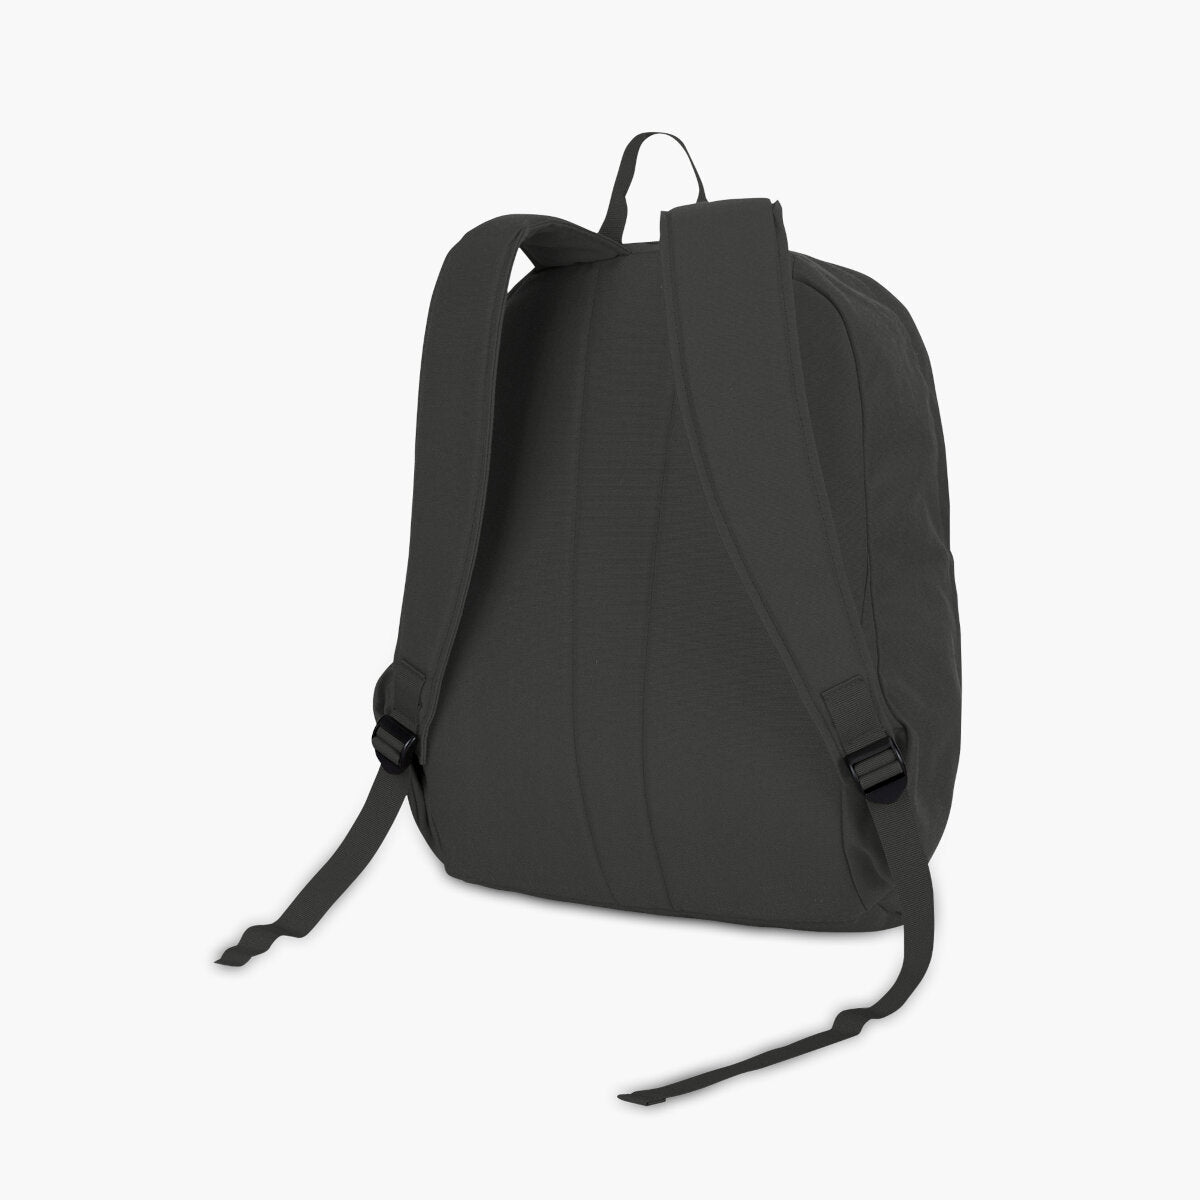 Green | Protecta Steady Progress Laptop Backpack - 7